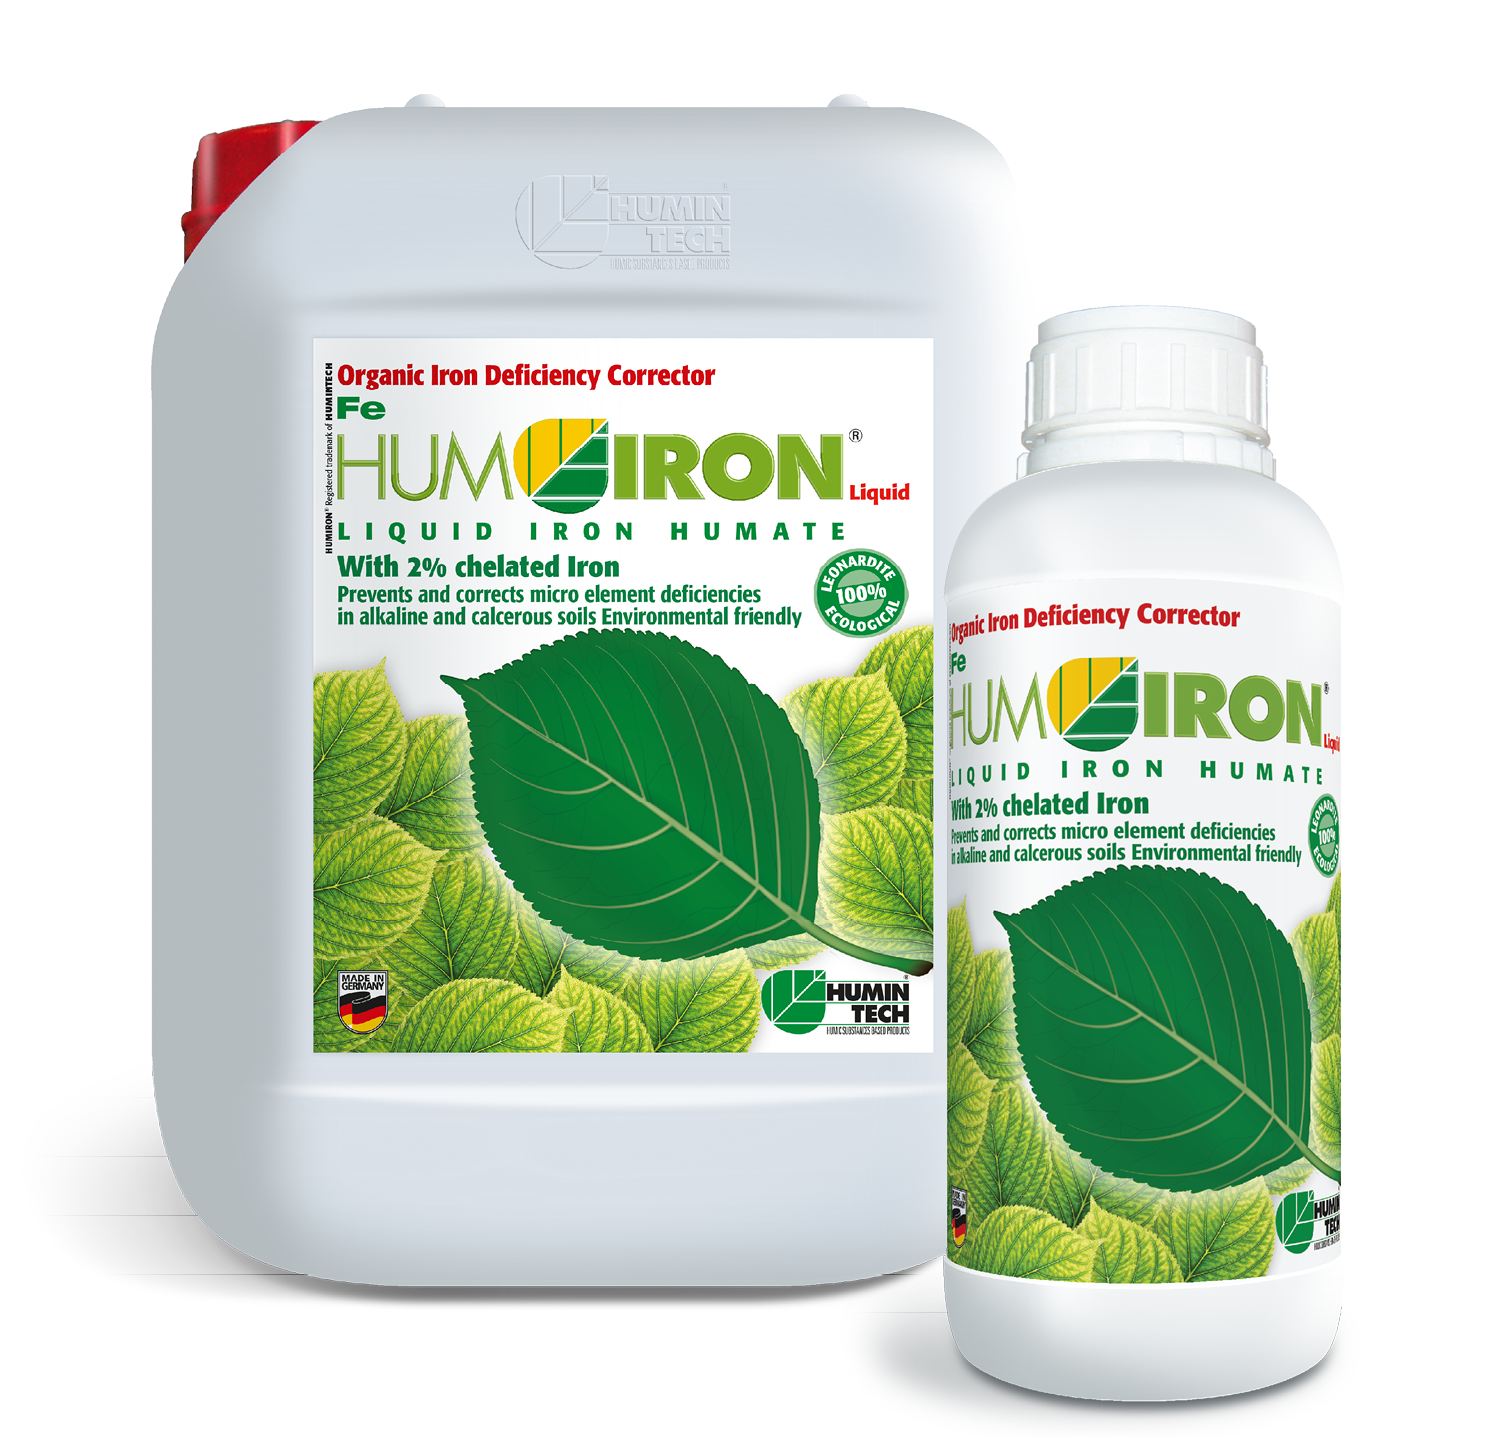 HUMIRON Fe Liquid Organic Iron Deficiency Corrector Liquid iron humate with 2% chelated iron 